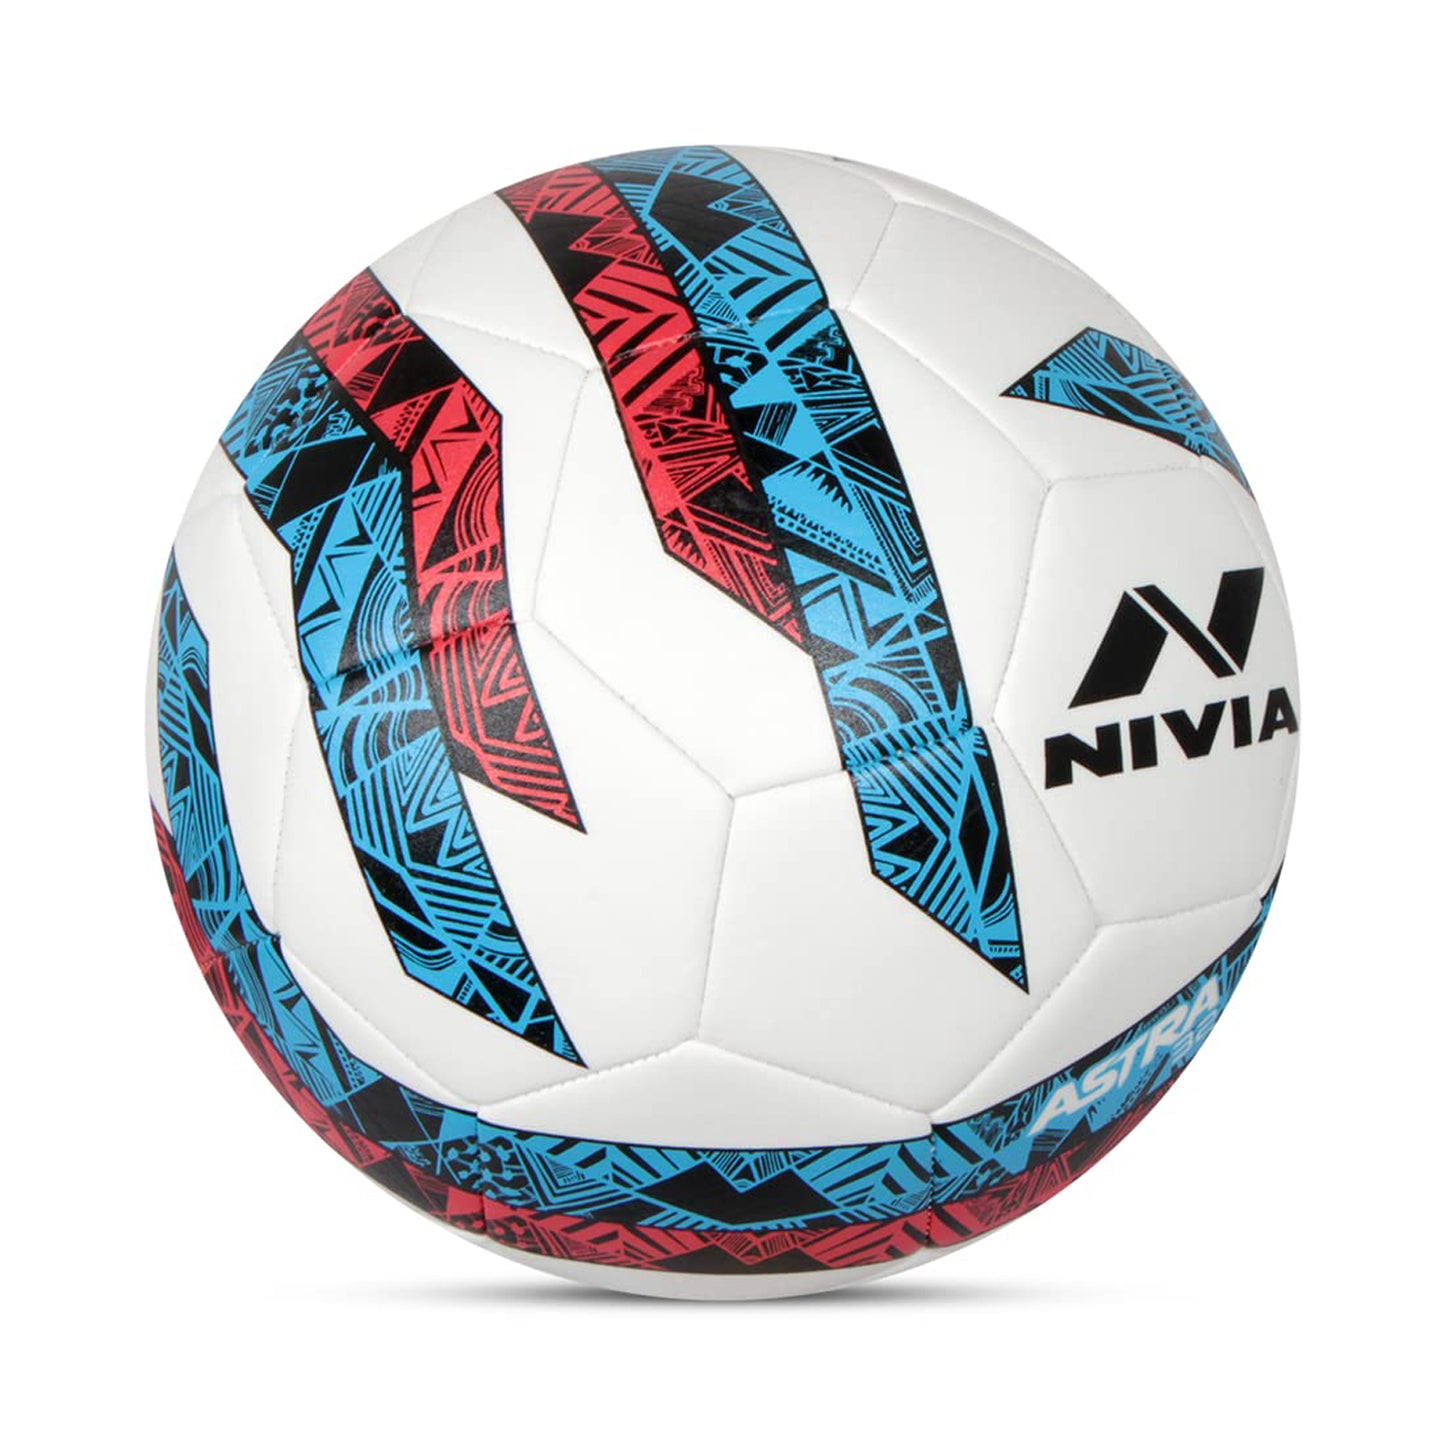 Nivia Astra 32 TPU Football, White - Size 5 - Best Price online Prokicksports.com